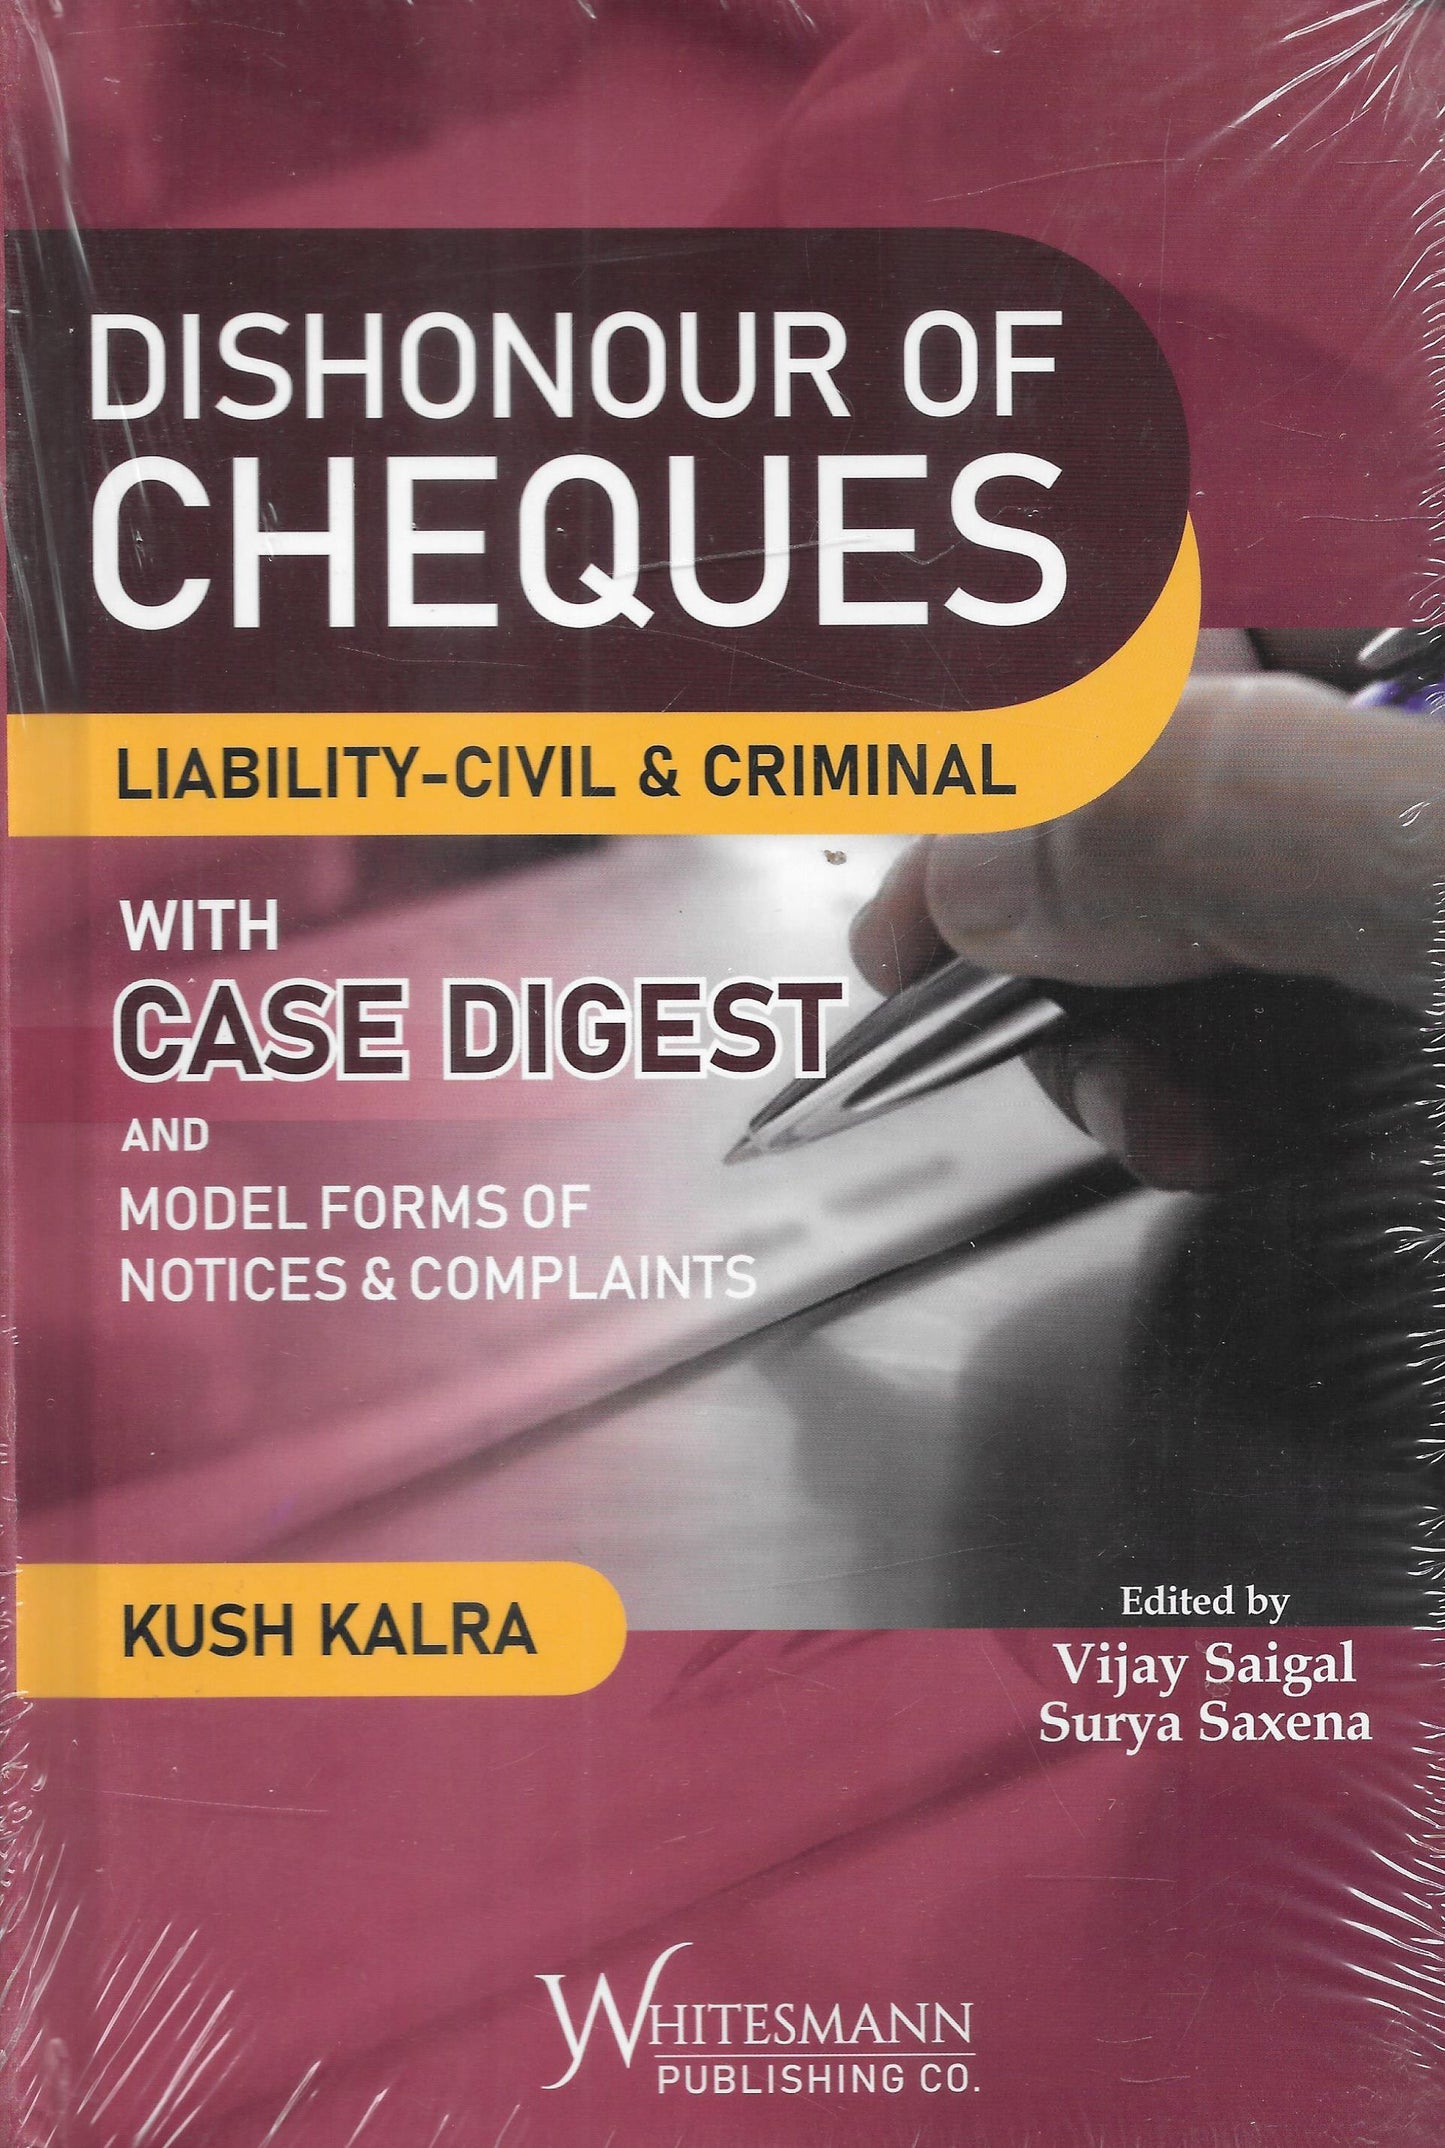 Dishonur Of Cheques Liability-Civil & Criminal